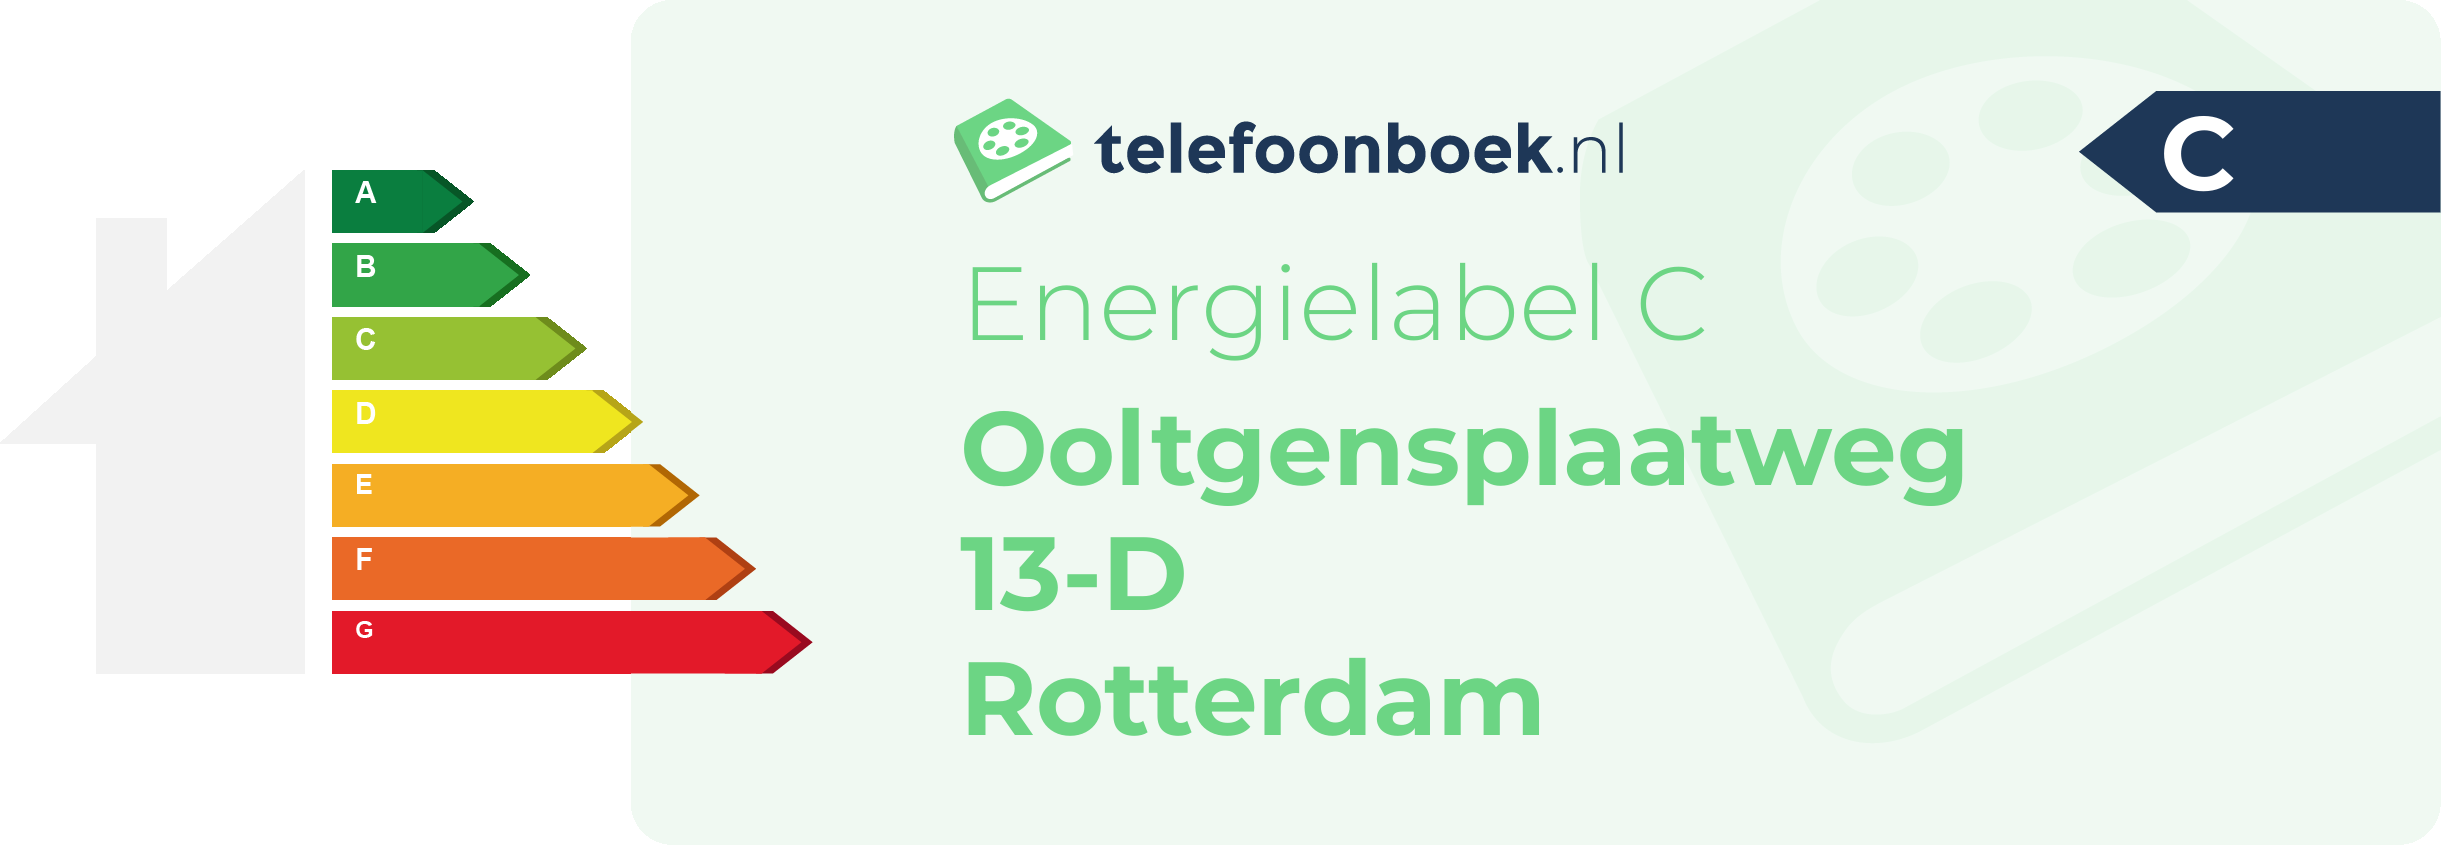 Energielabel Ooltgensplaatweg 13-D Rotterdam